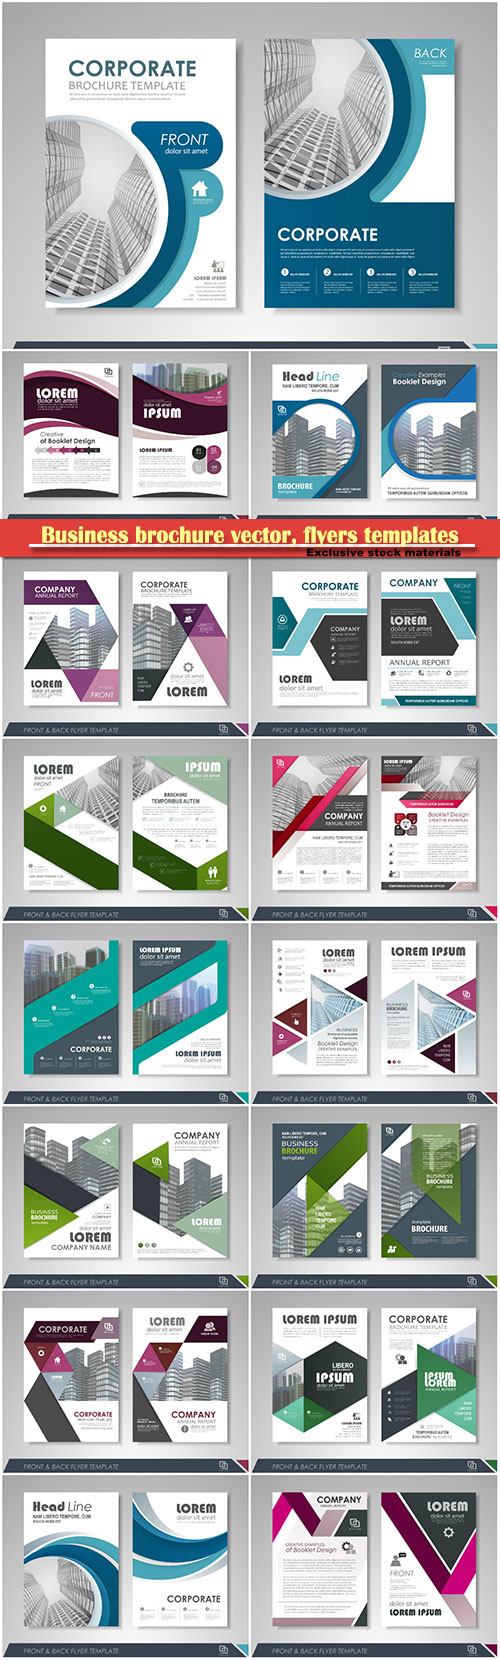 Business brochure vector, flyers templates, report cover design # 88